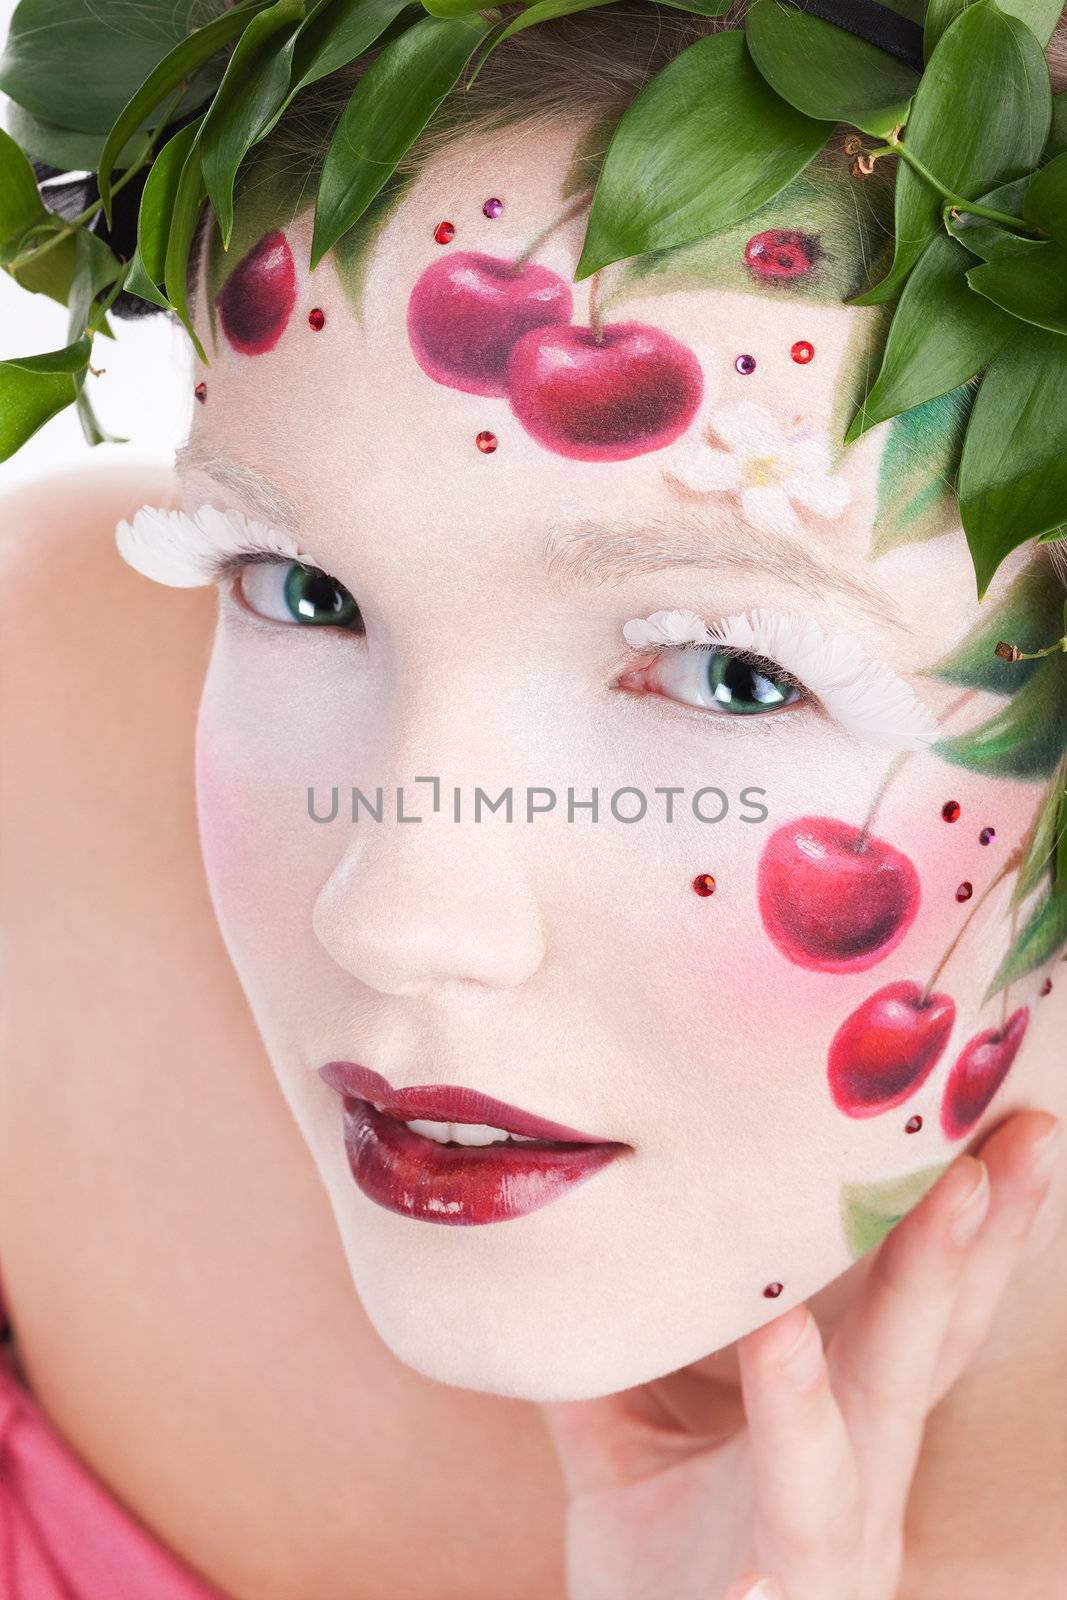 Closeup portrait of woman's face with a fantasy cherry makeup